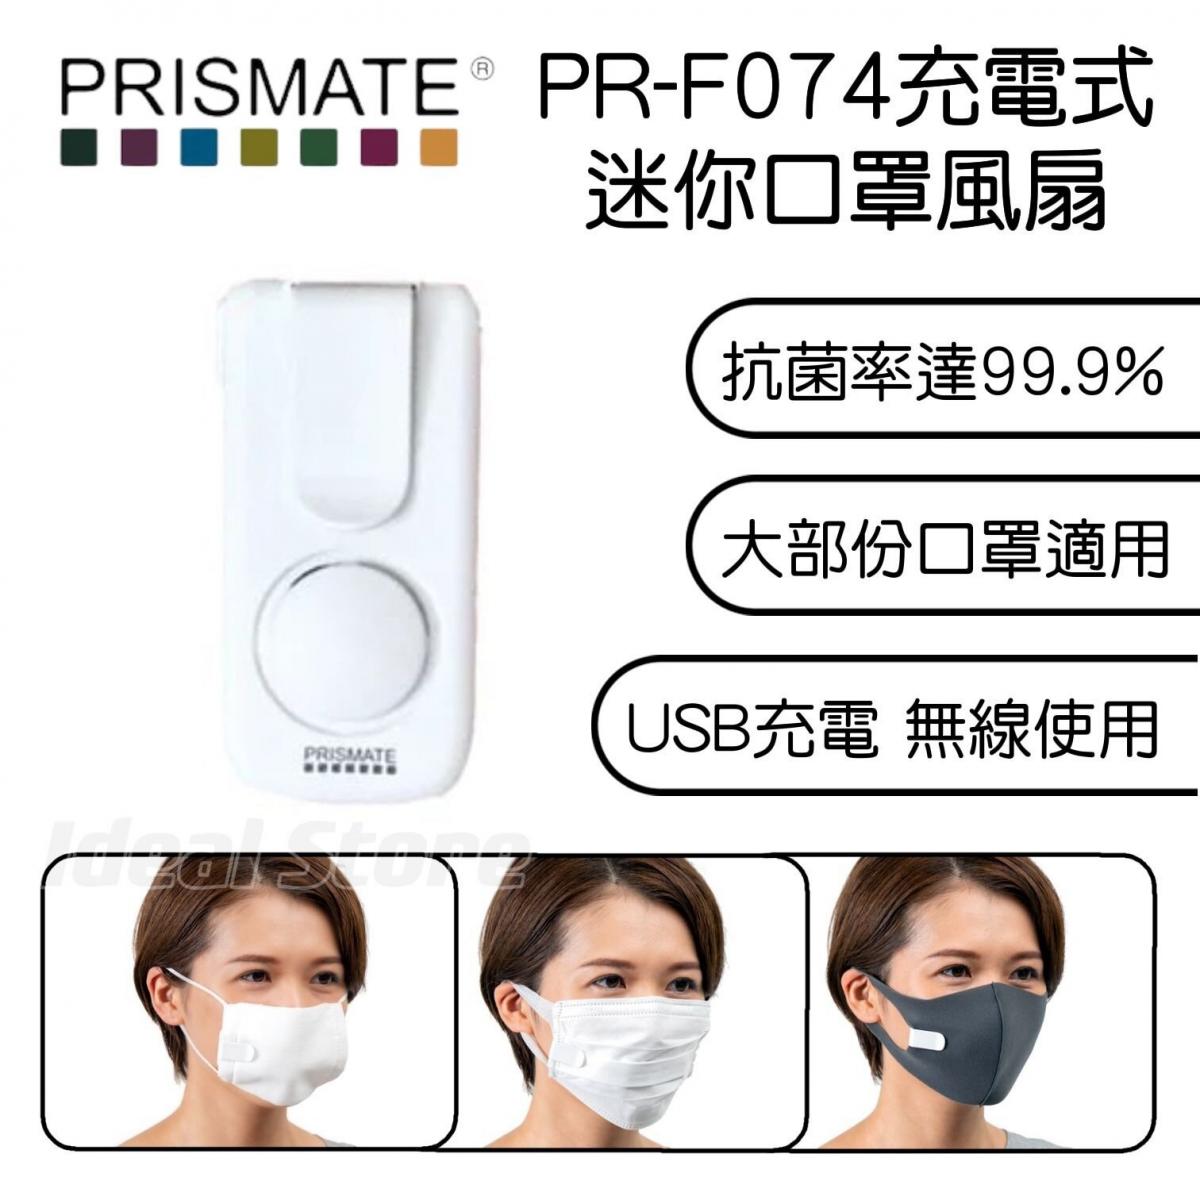 Prismate - PR-F074 Rechargeable Mini Mask Fan｜Masculator｜Mask Fan｜Special for Masks｜Portable